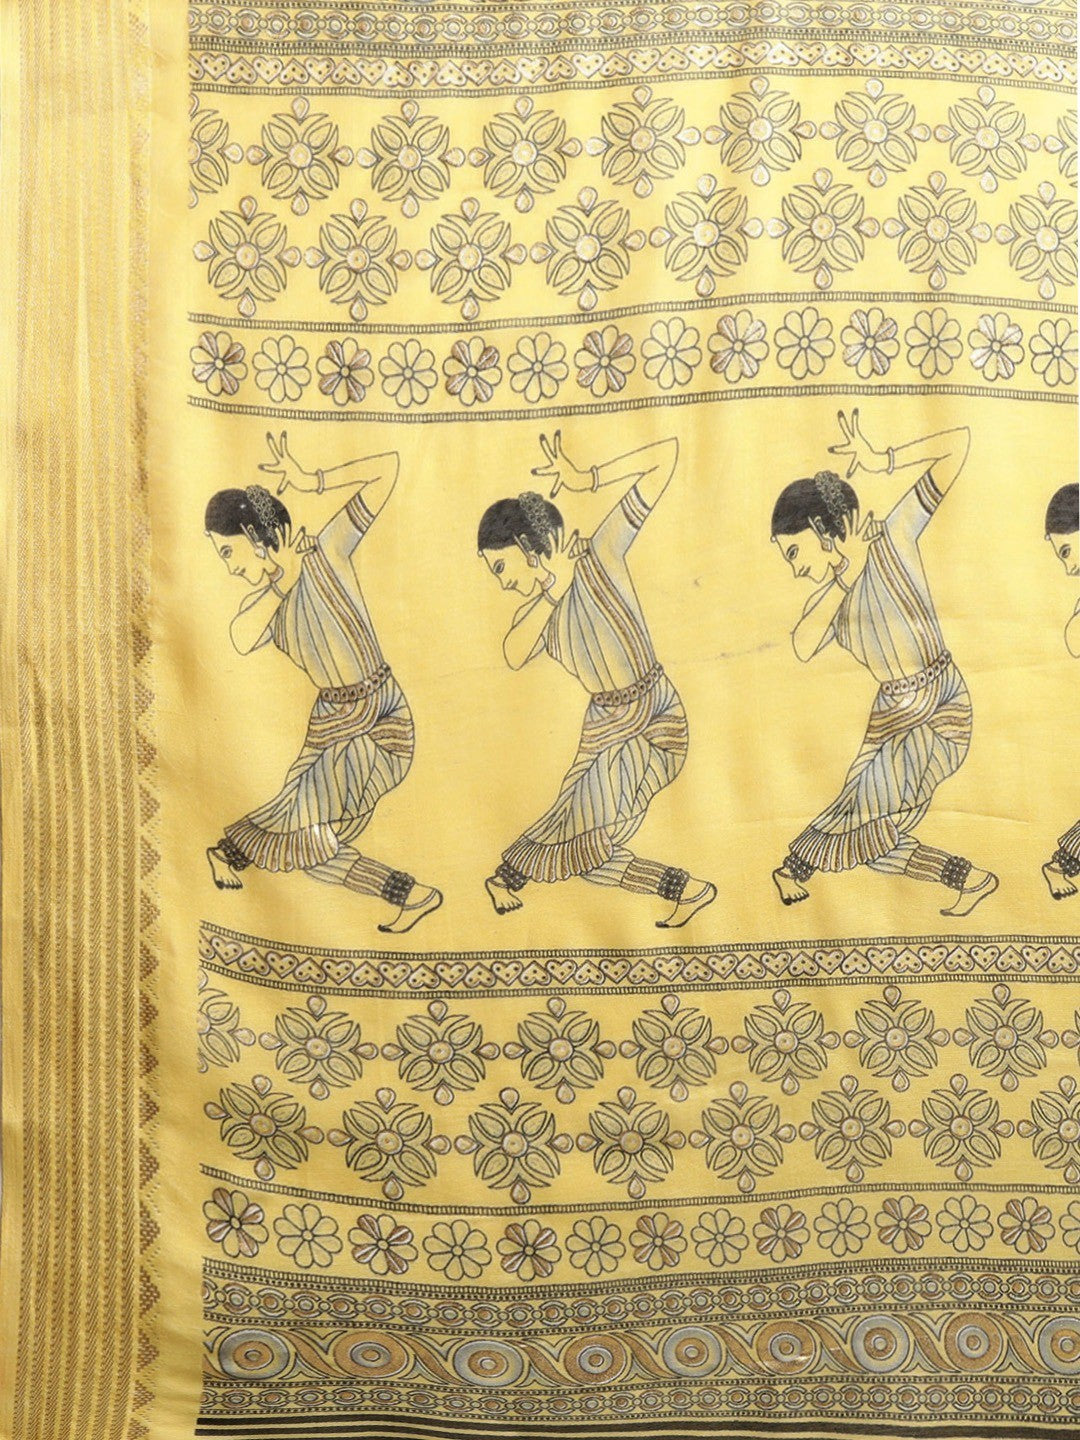 Women's Yellow Art Silk Printed Saree - Ahika